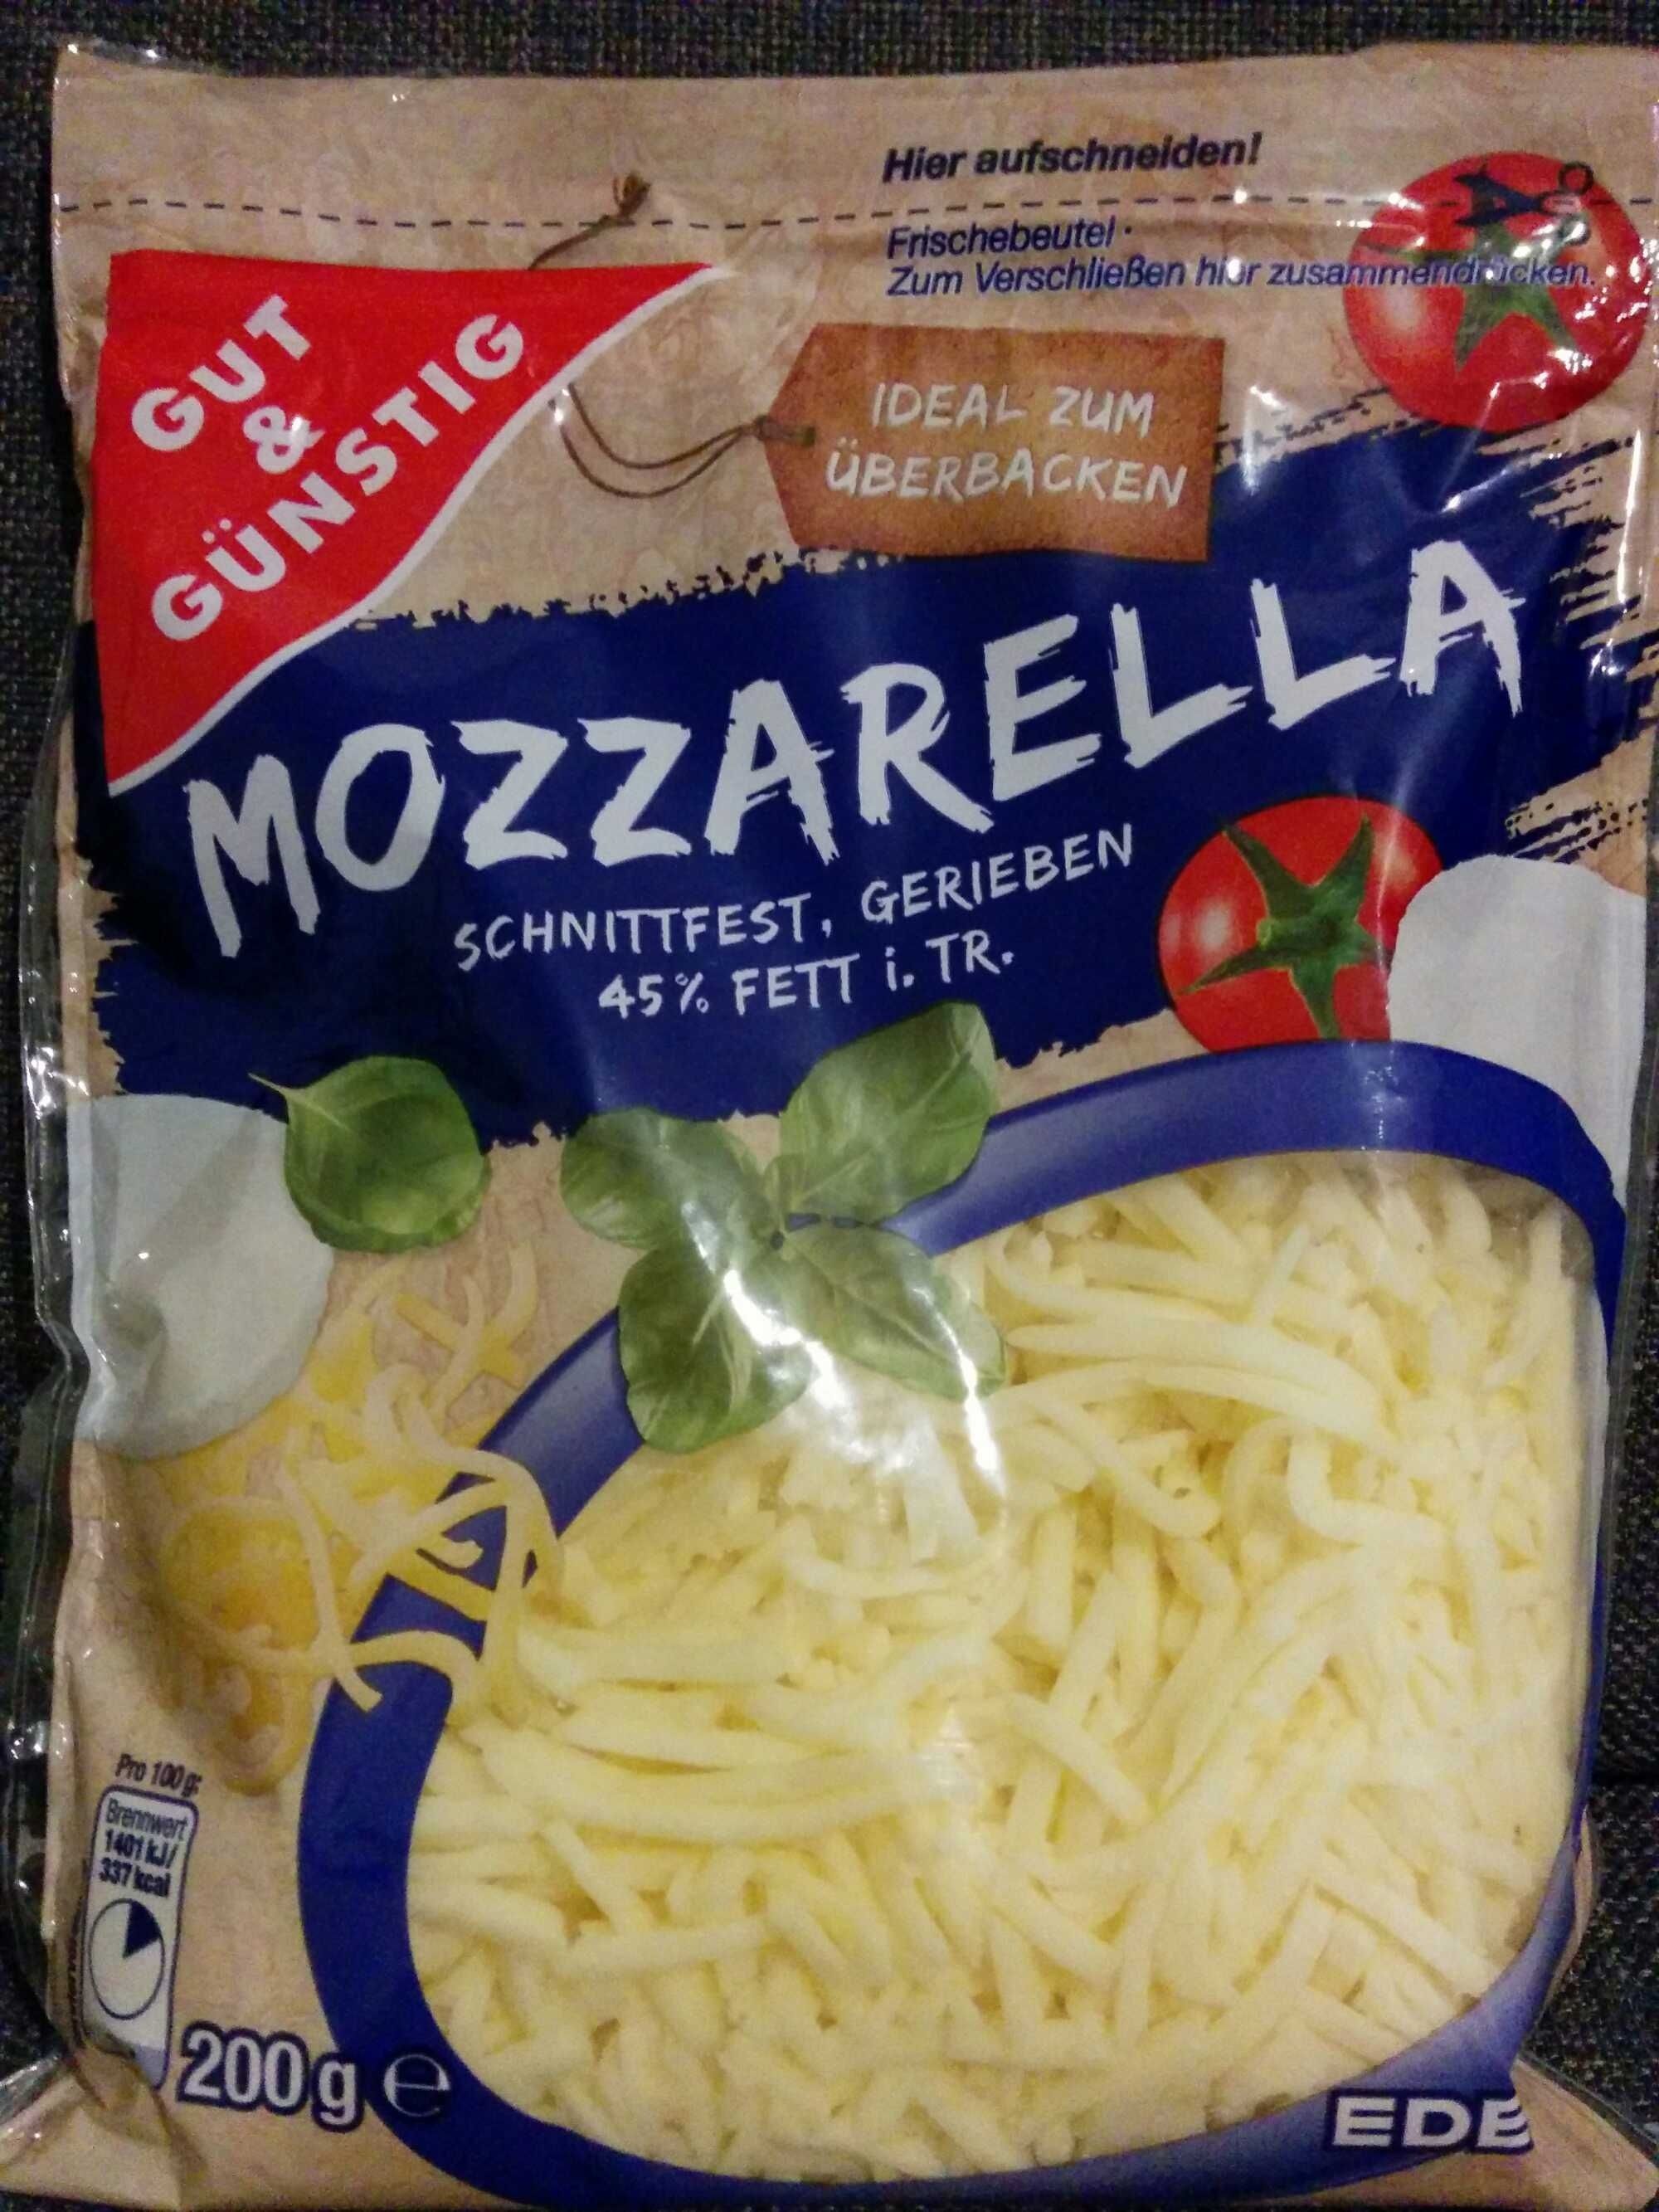 Mozzarella, Gut & Gunstig